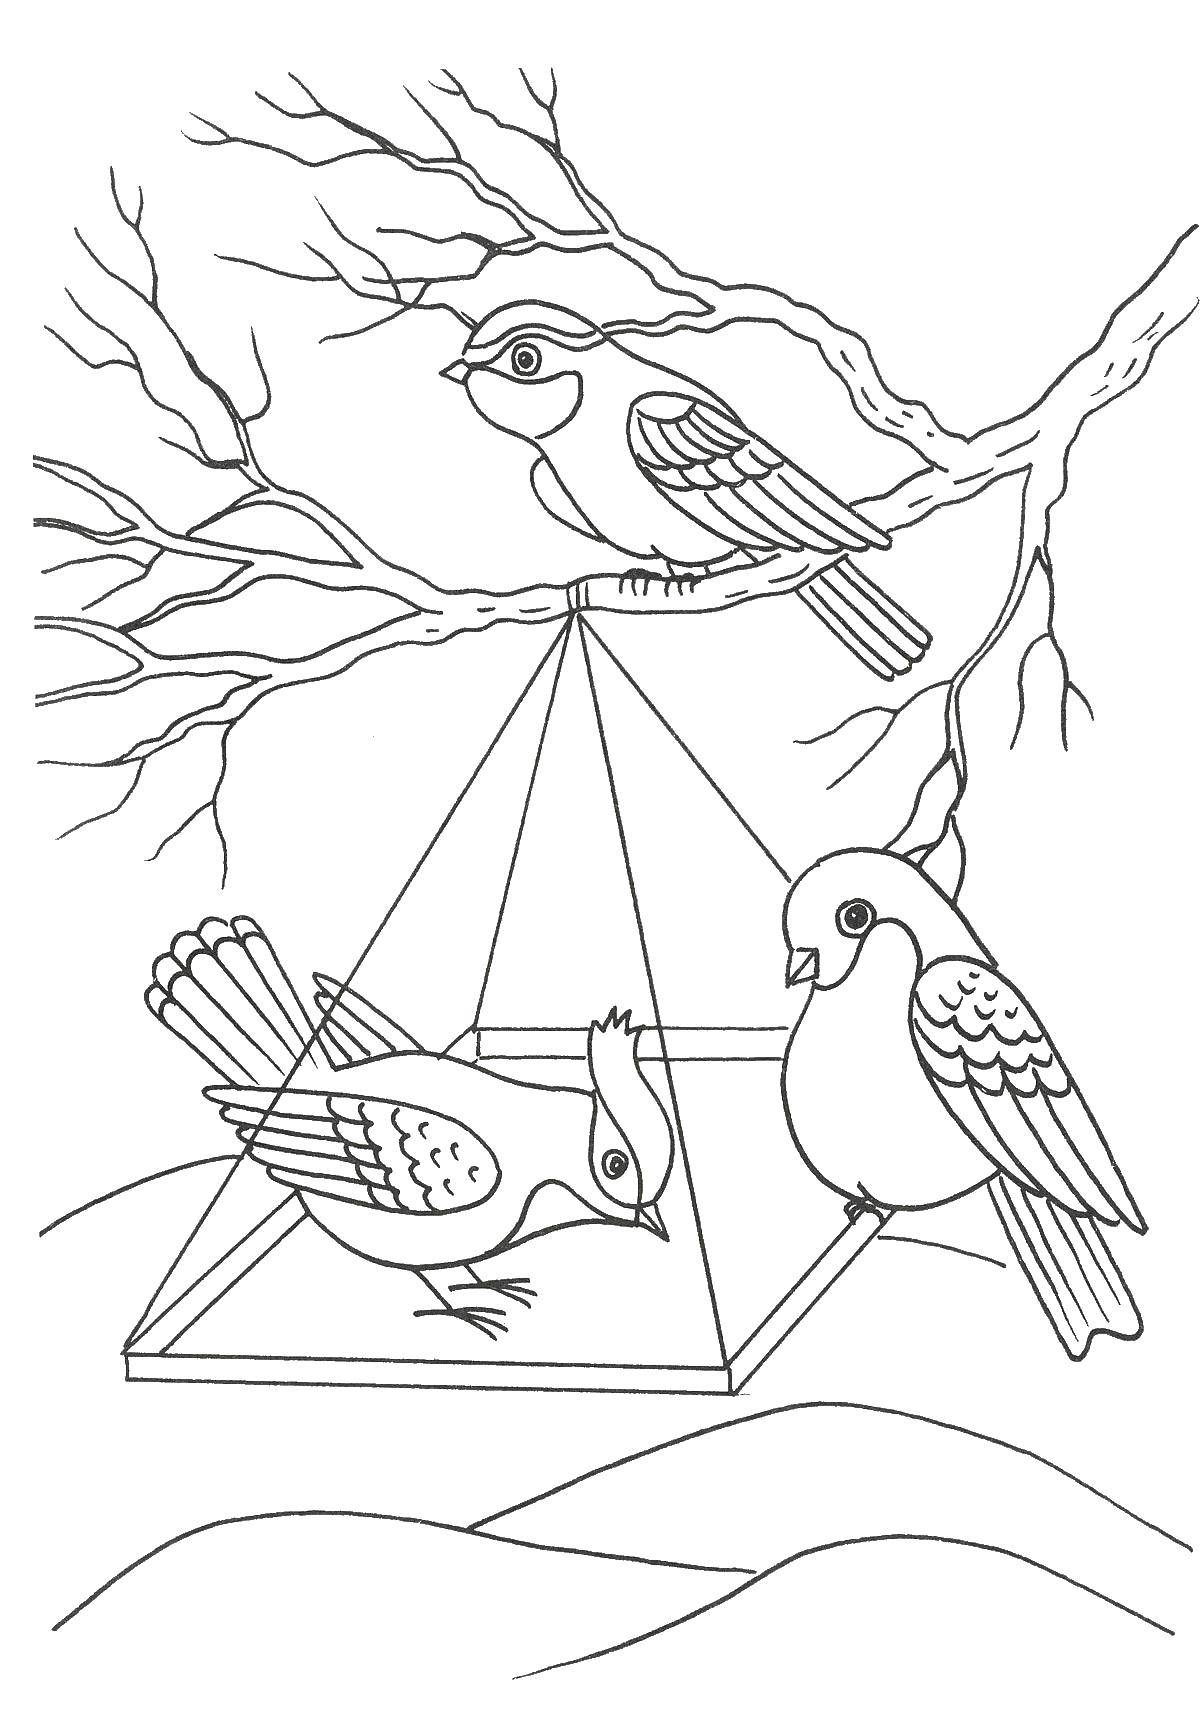 Coloring Birdhouse birds. Category winter. Tags:  birds, snow, birdhouse.